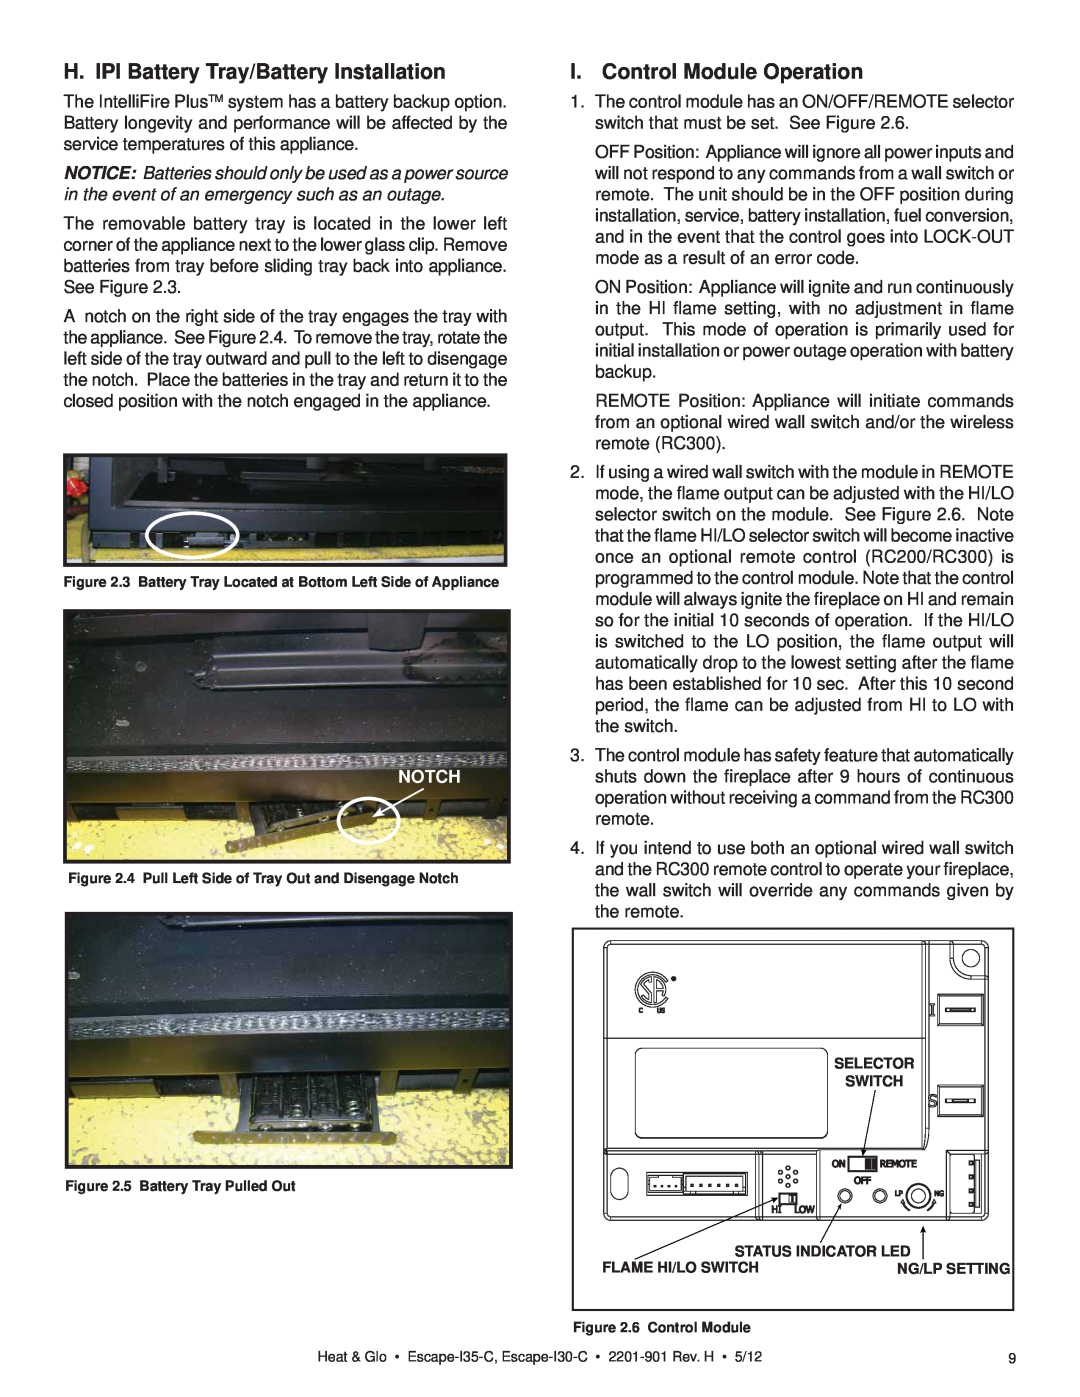 Heat & Glo LifeStyle ESCAPE-I35-C owner manual H. IPI Battery Tray/Battery Installation, I. Control Module Operation, Notch 